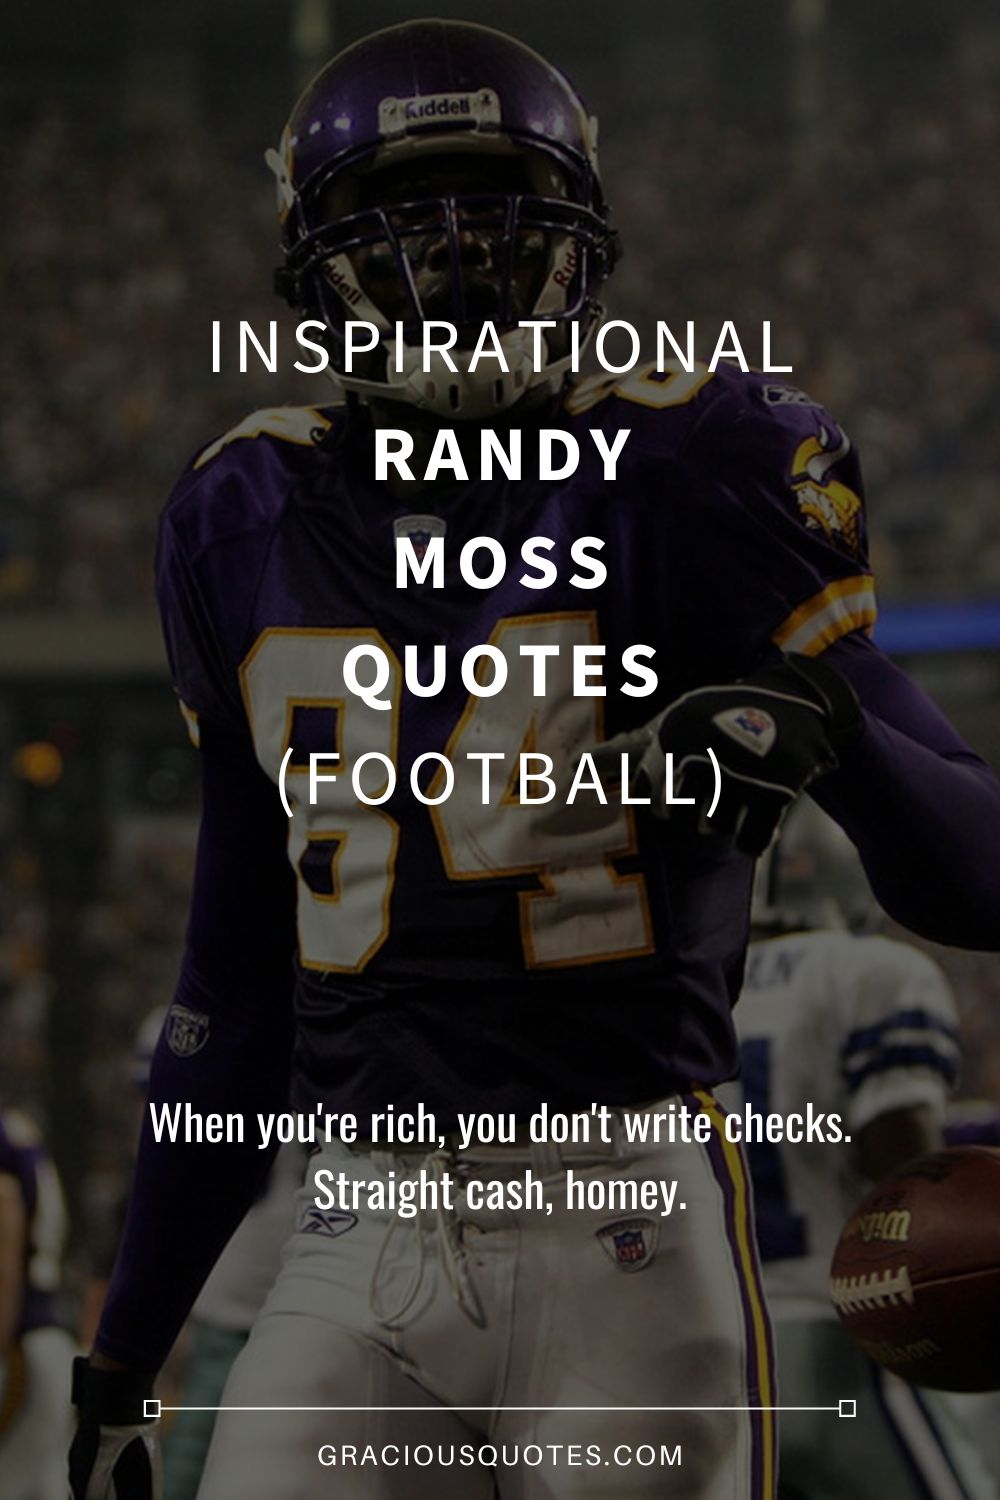 Inspirational Randy Moss Quotes (FOOTBALL) - Gracious Quotes